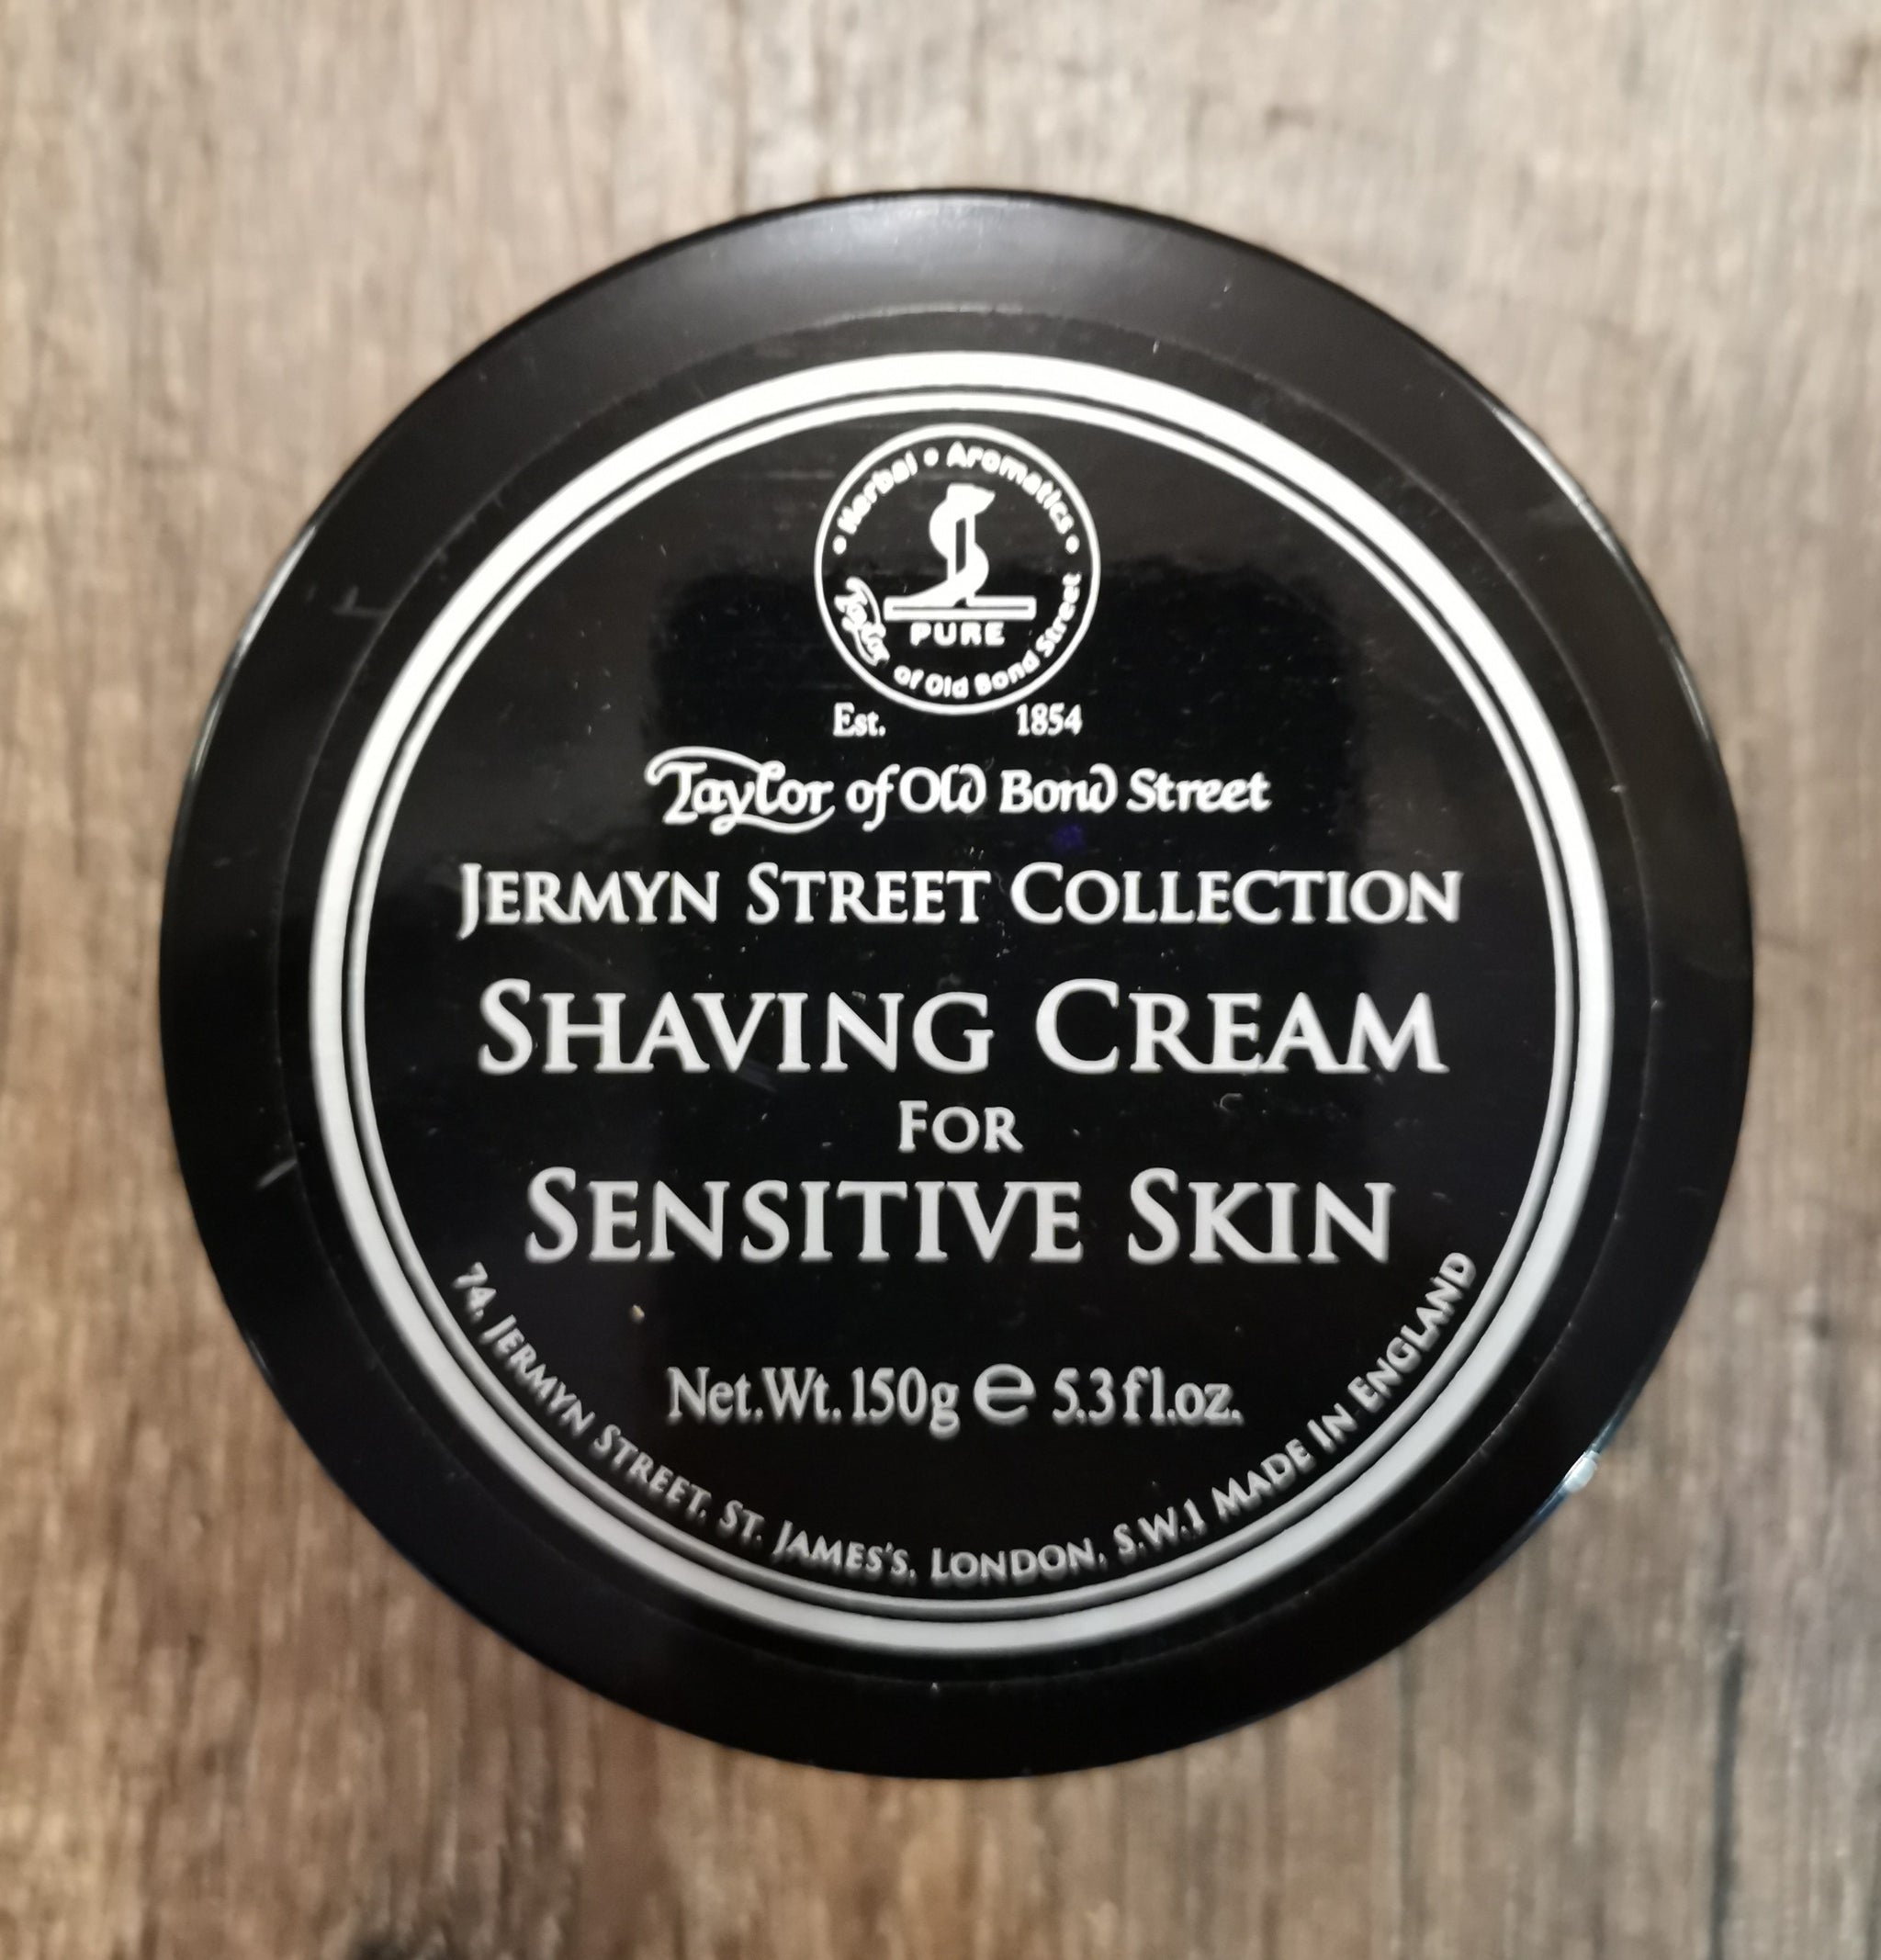 Taylor's Of Old Bond Street Shaving Creams